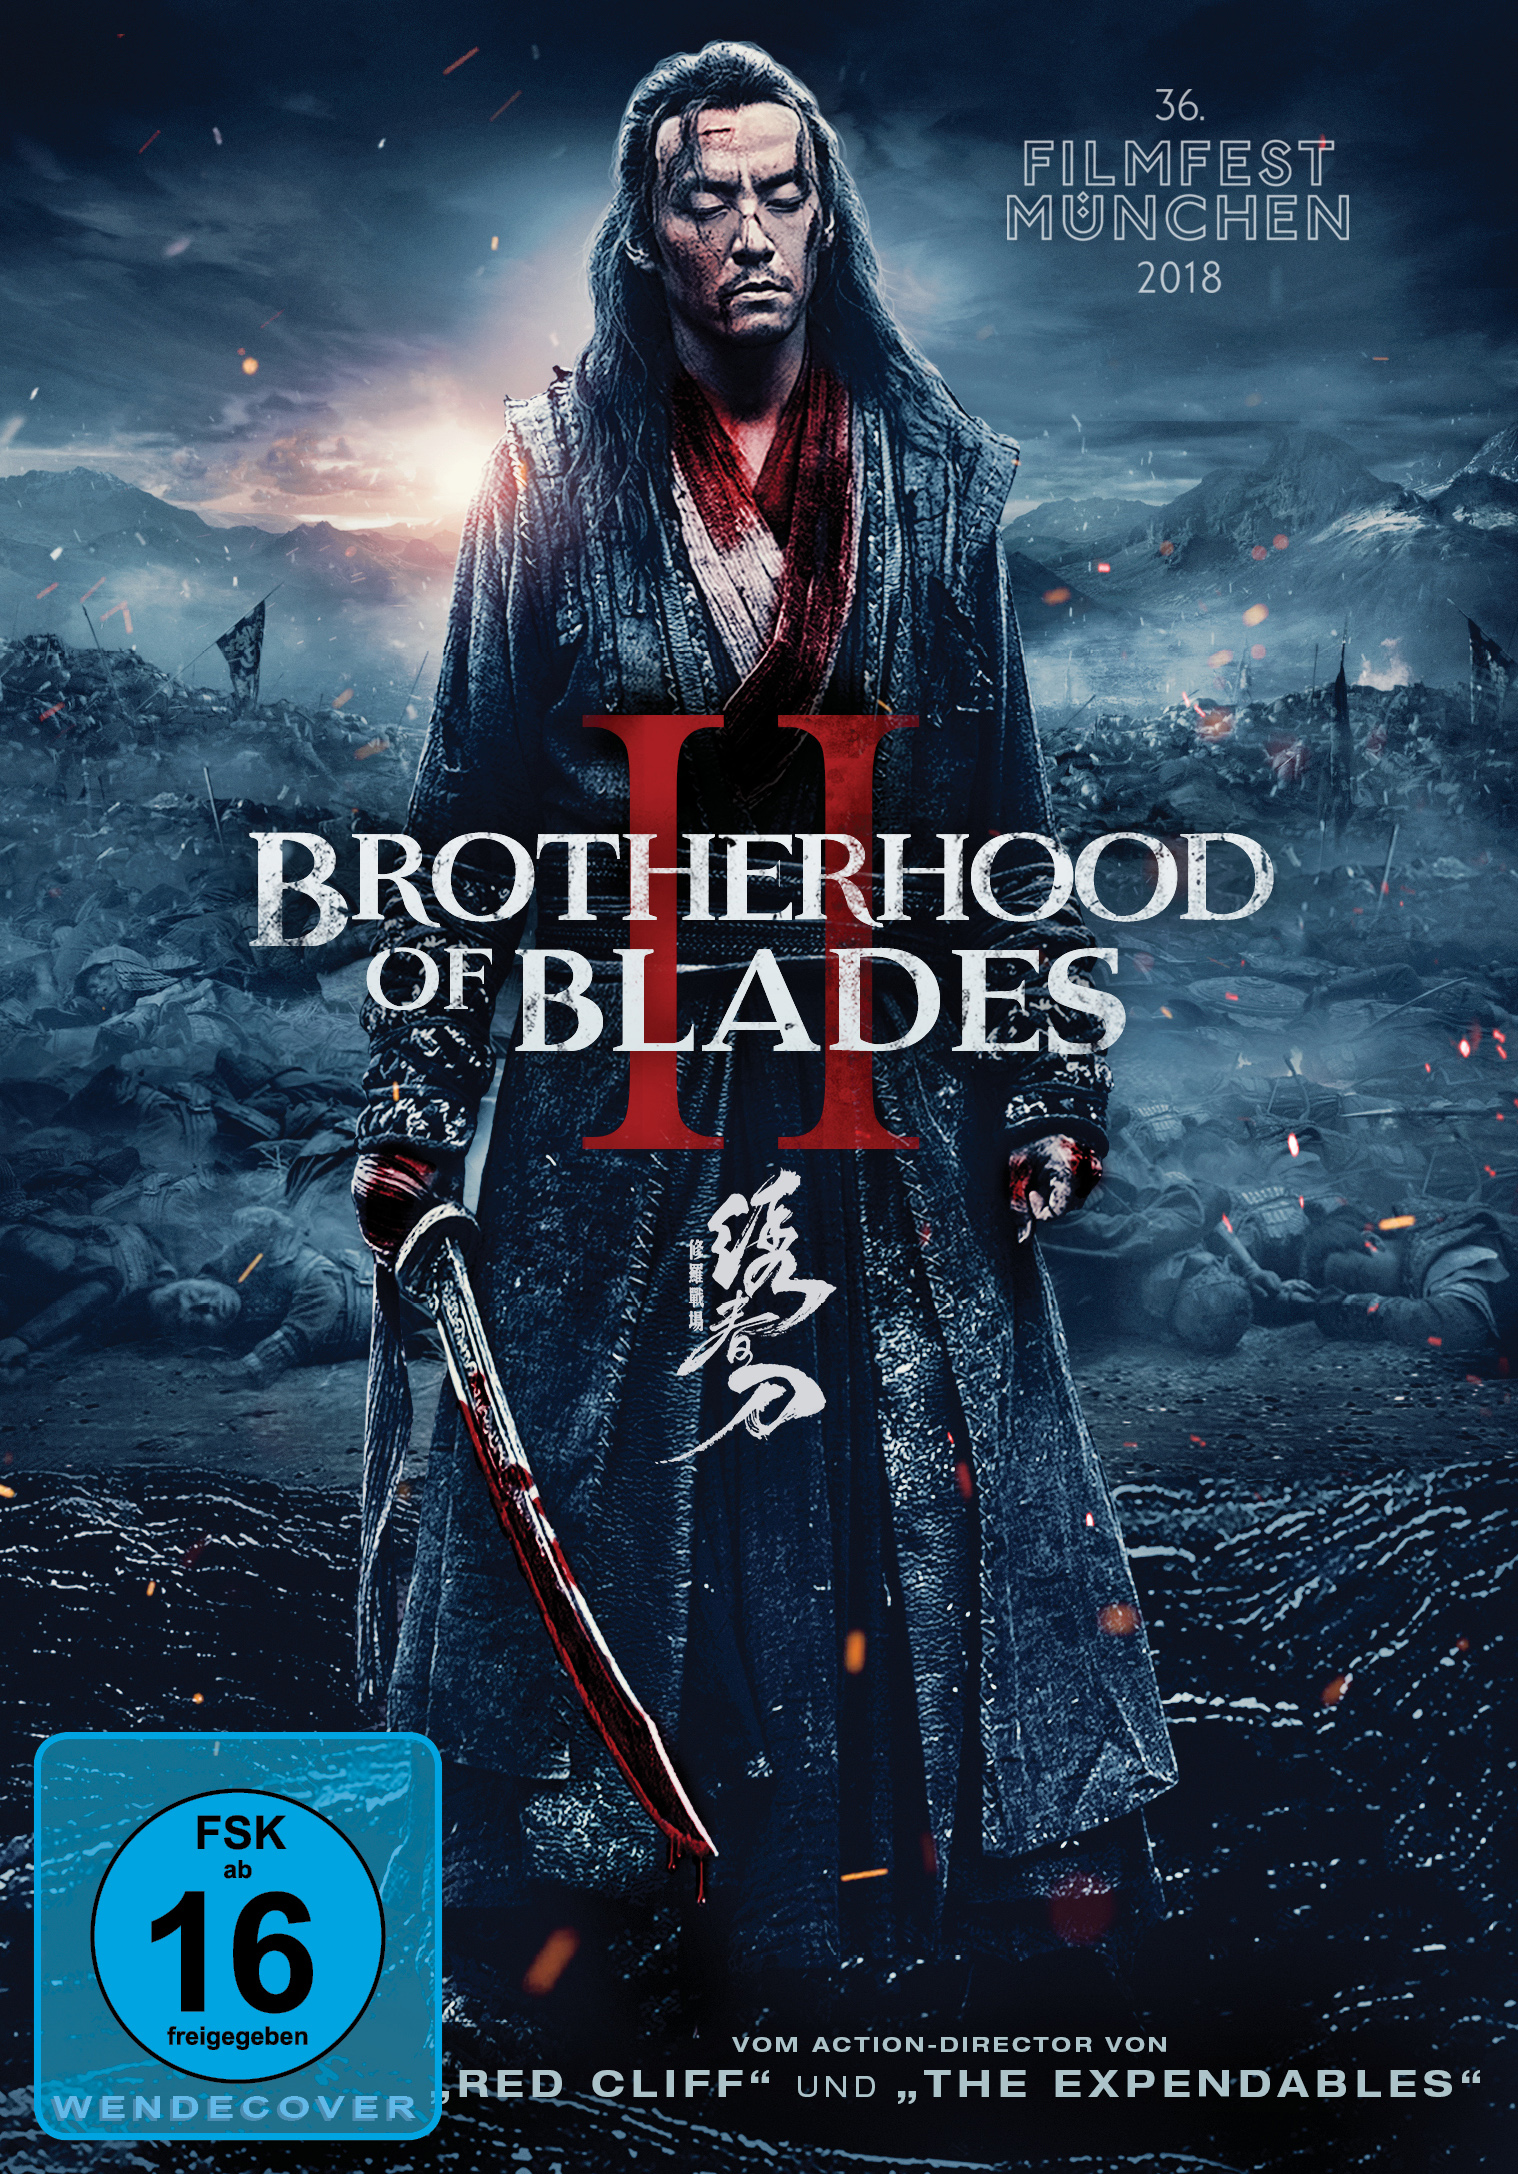 DVD 2 Of Brotherhood Blades